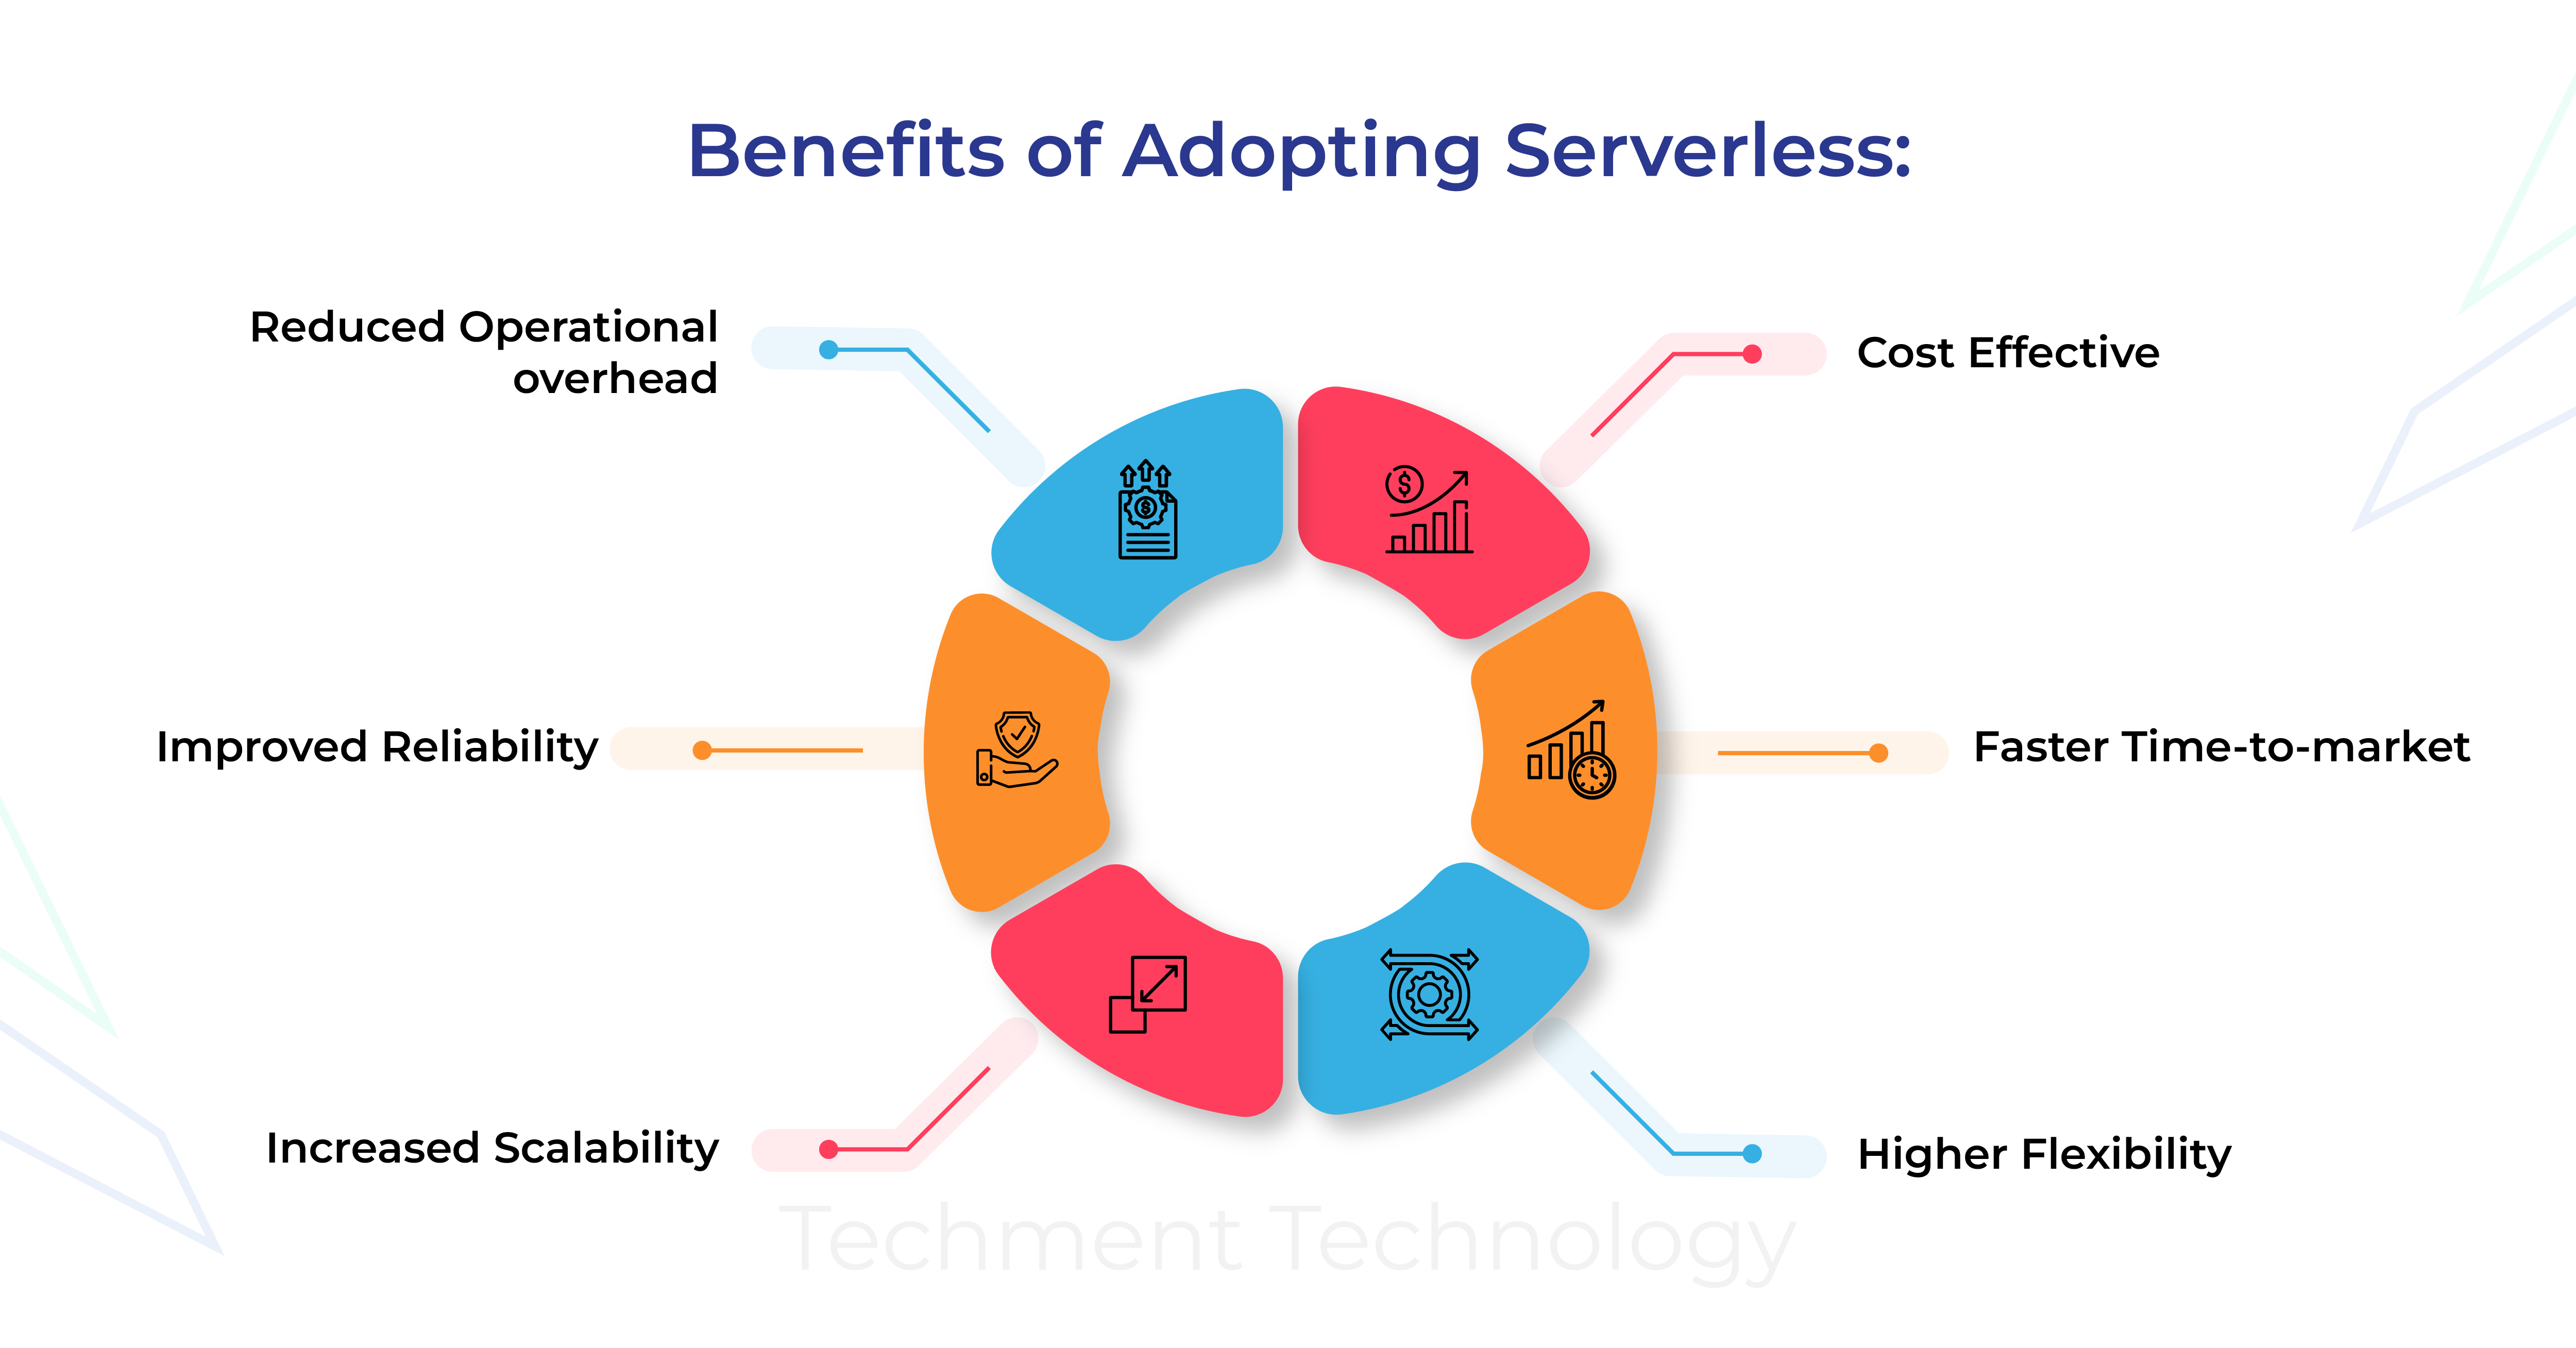 Benefits of Adopting Serverless